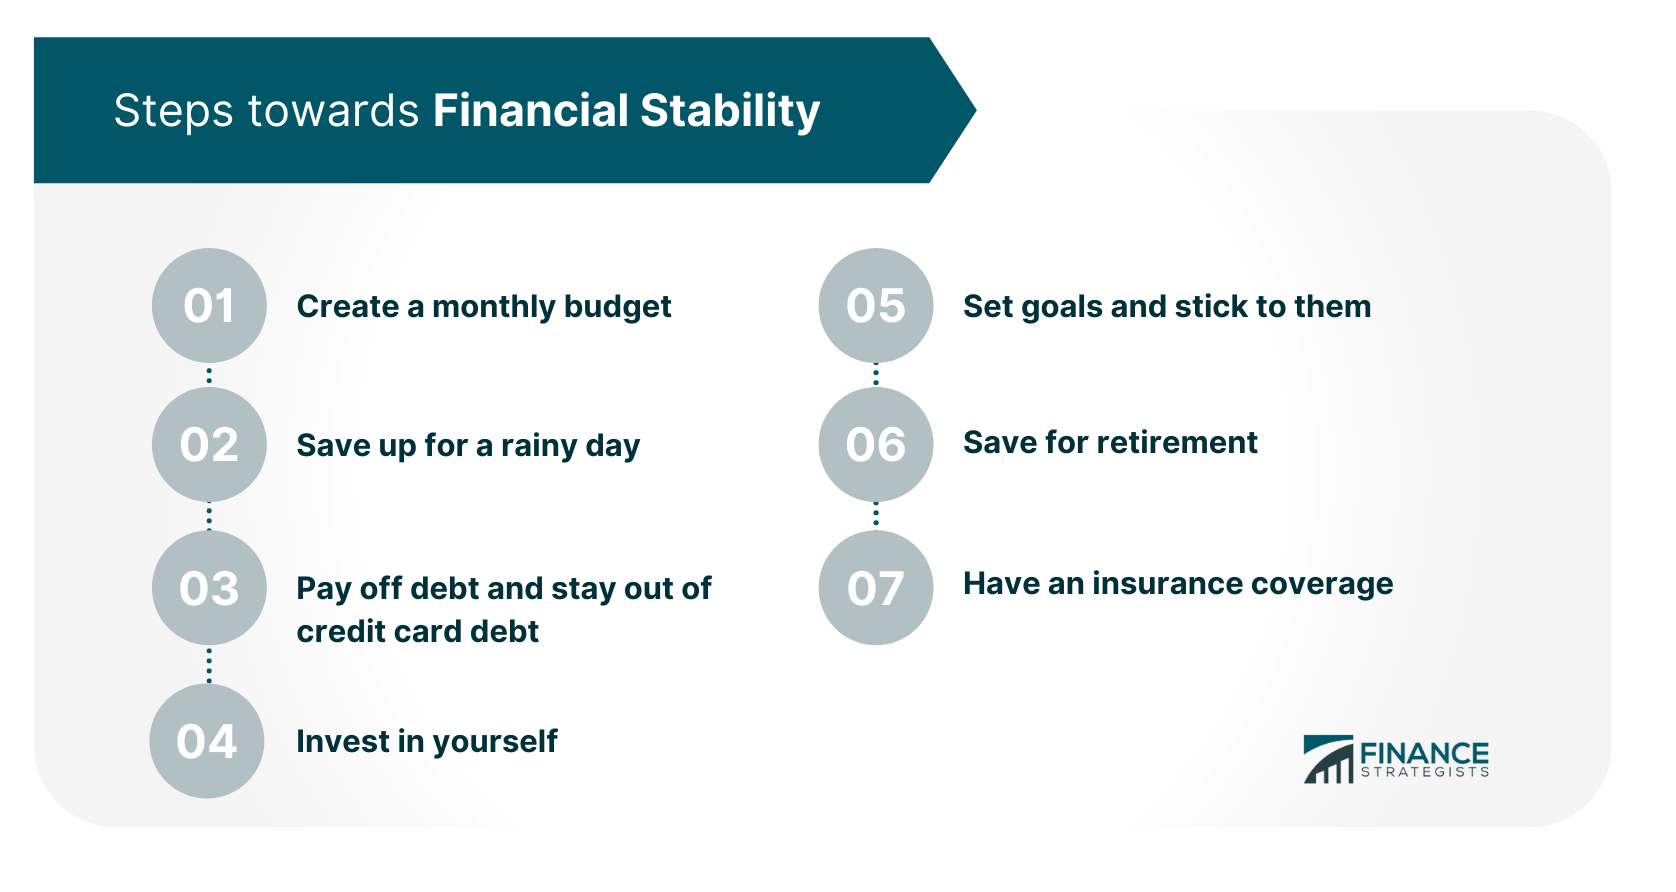 Steps towards Financial Stability